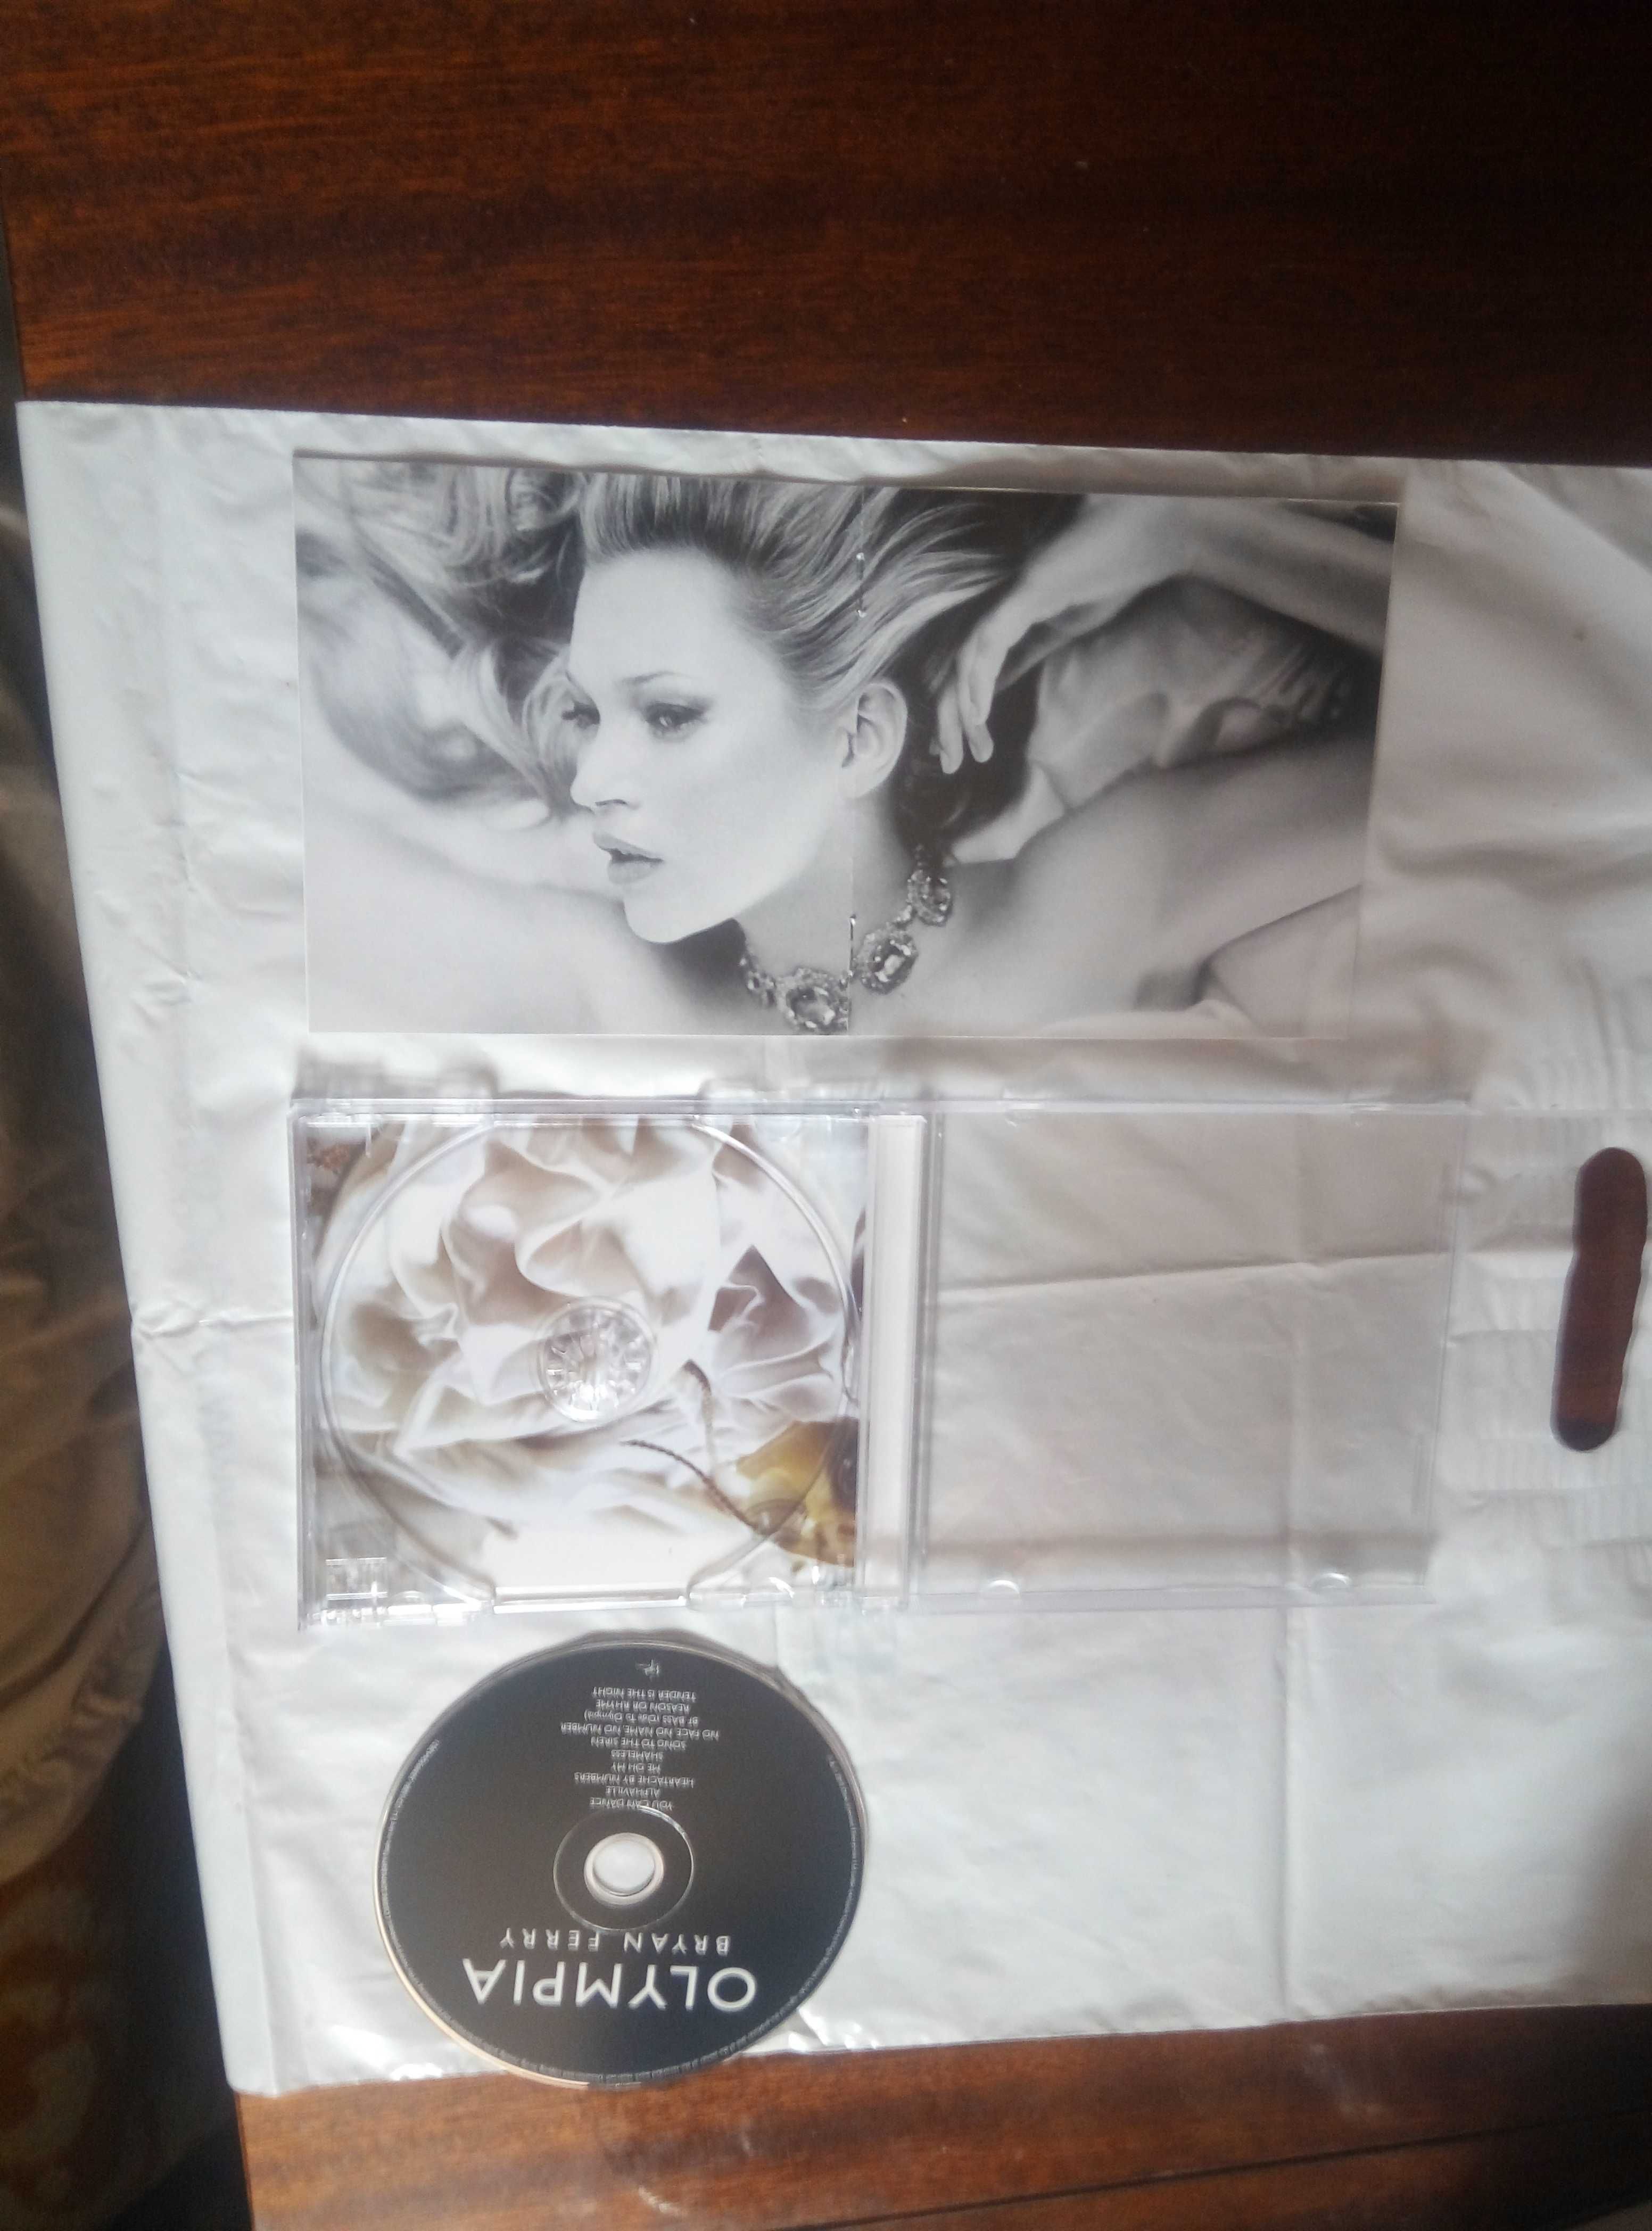 OLYMPIA Вryan Ferry фирменный CD диск